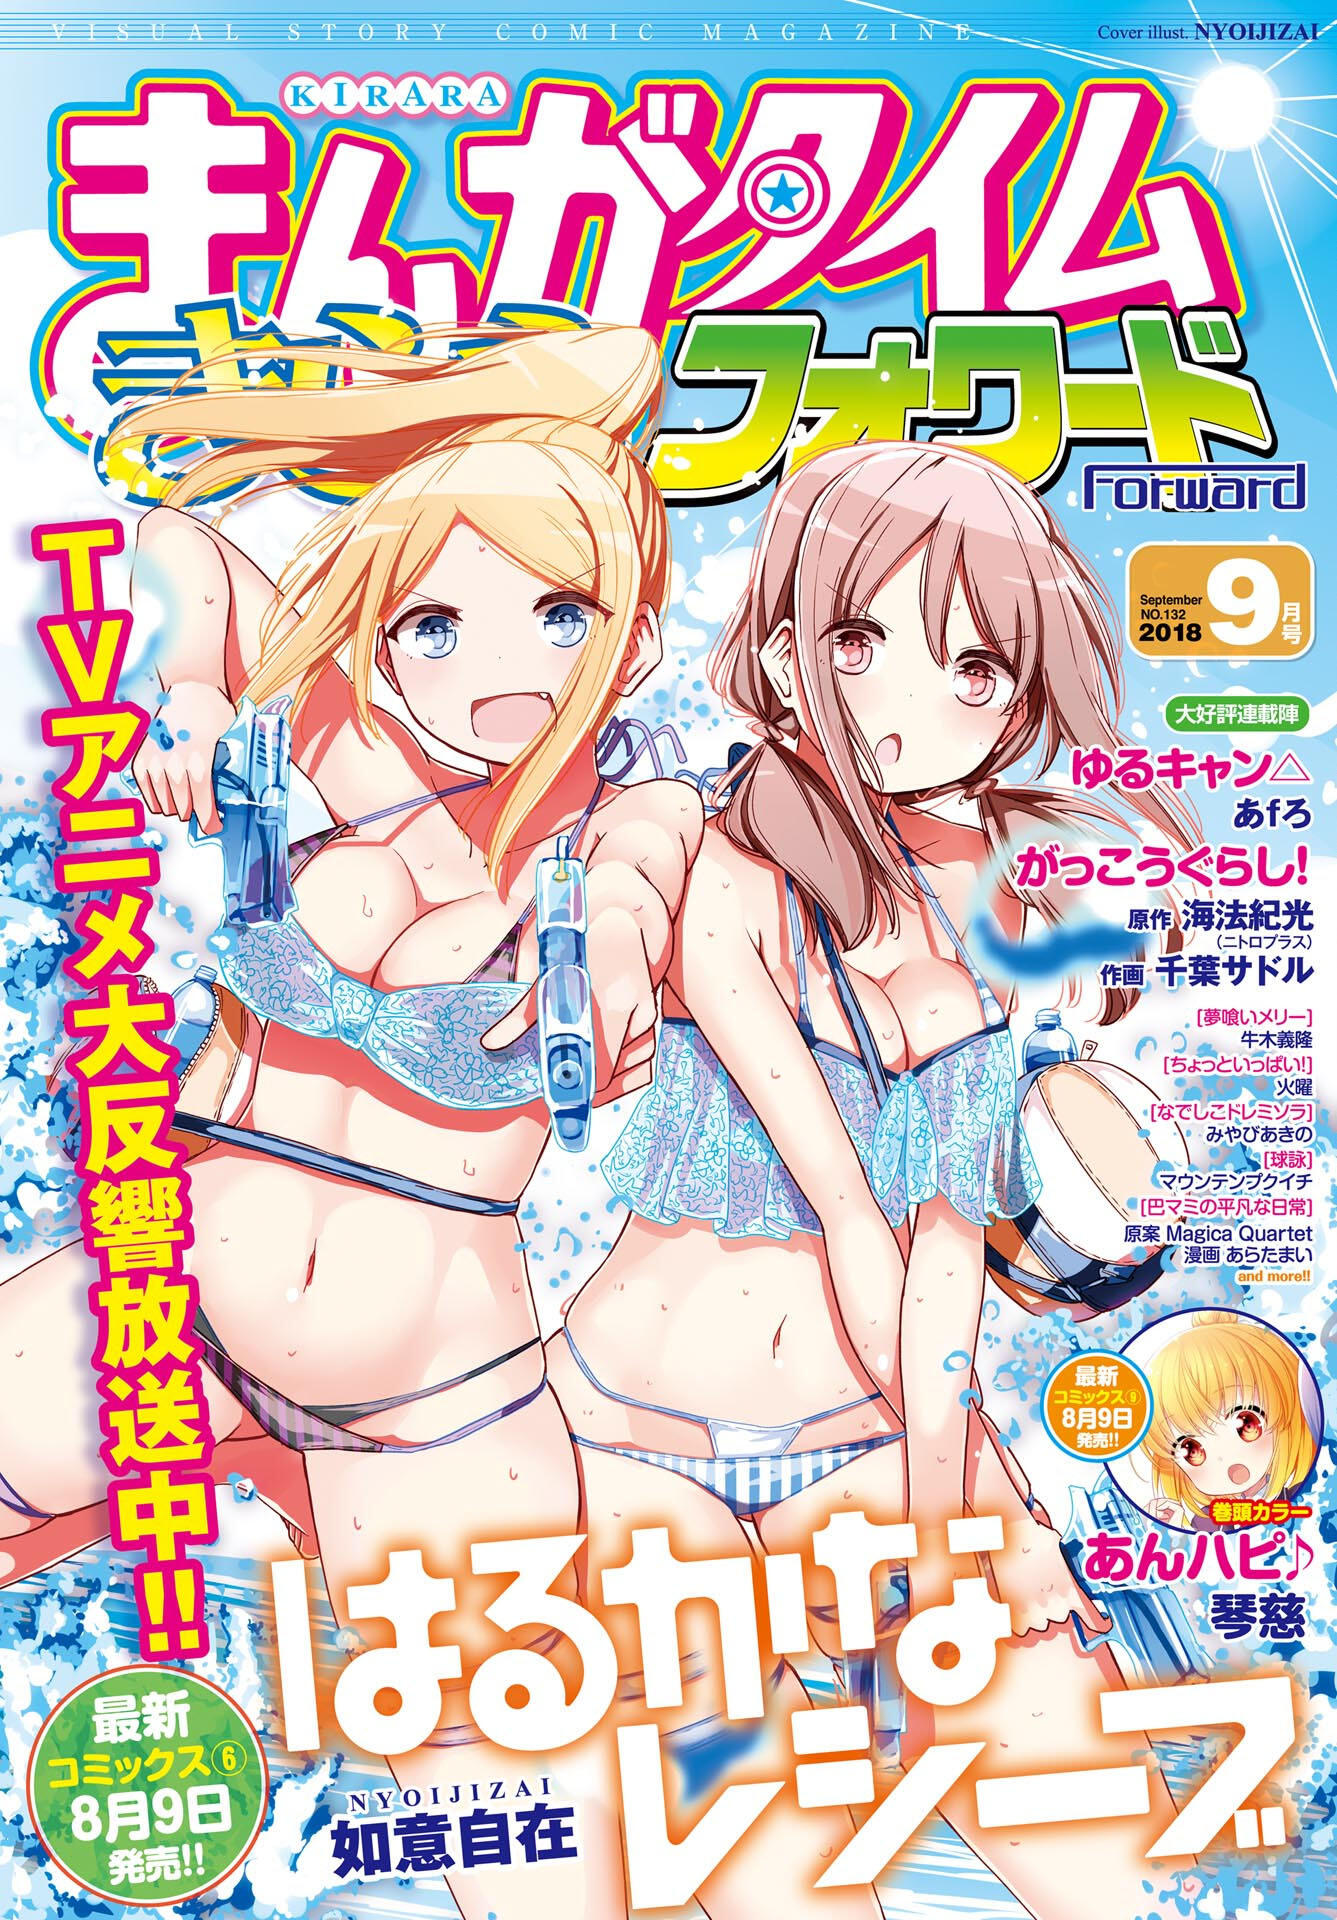 Harukana Receive Manga Volume 6